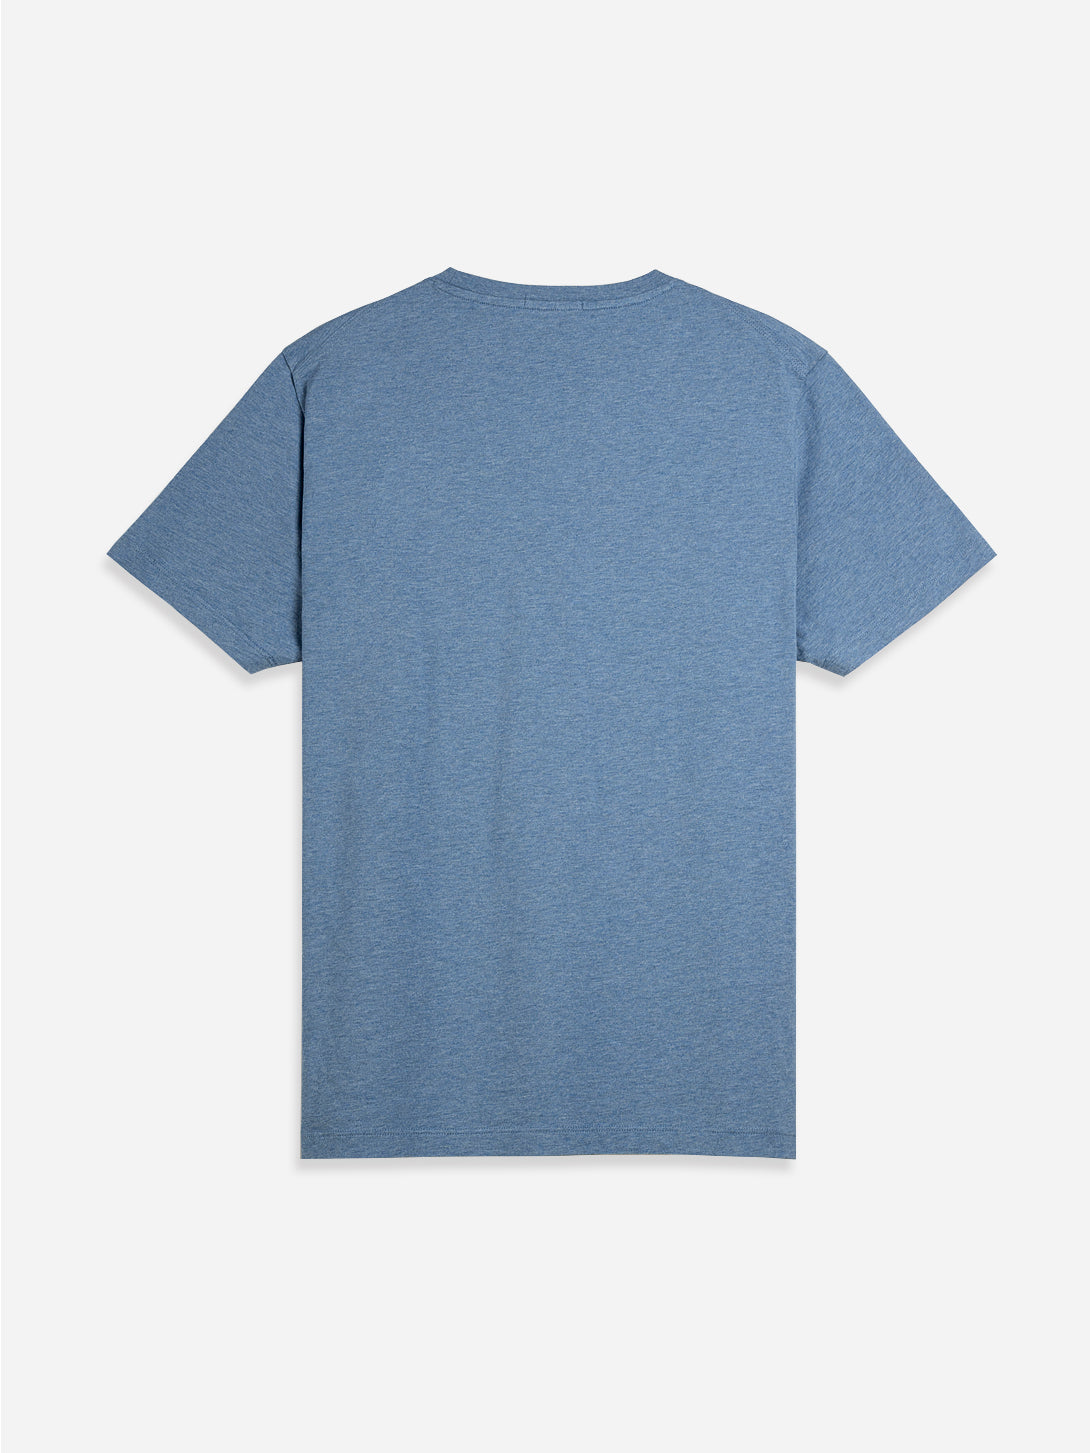 COBALT BLUE HEATHER Village Crew Neck Tee Mens Soft Fabric Logo Short Sleeve